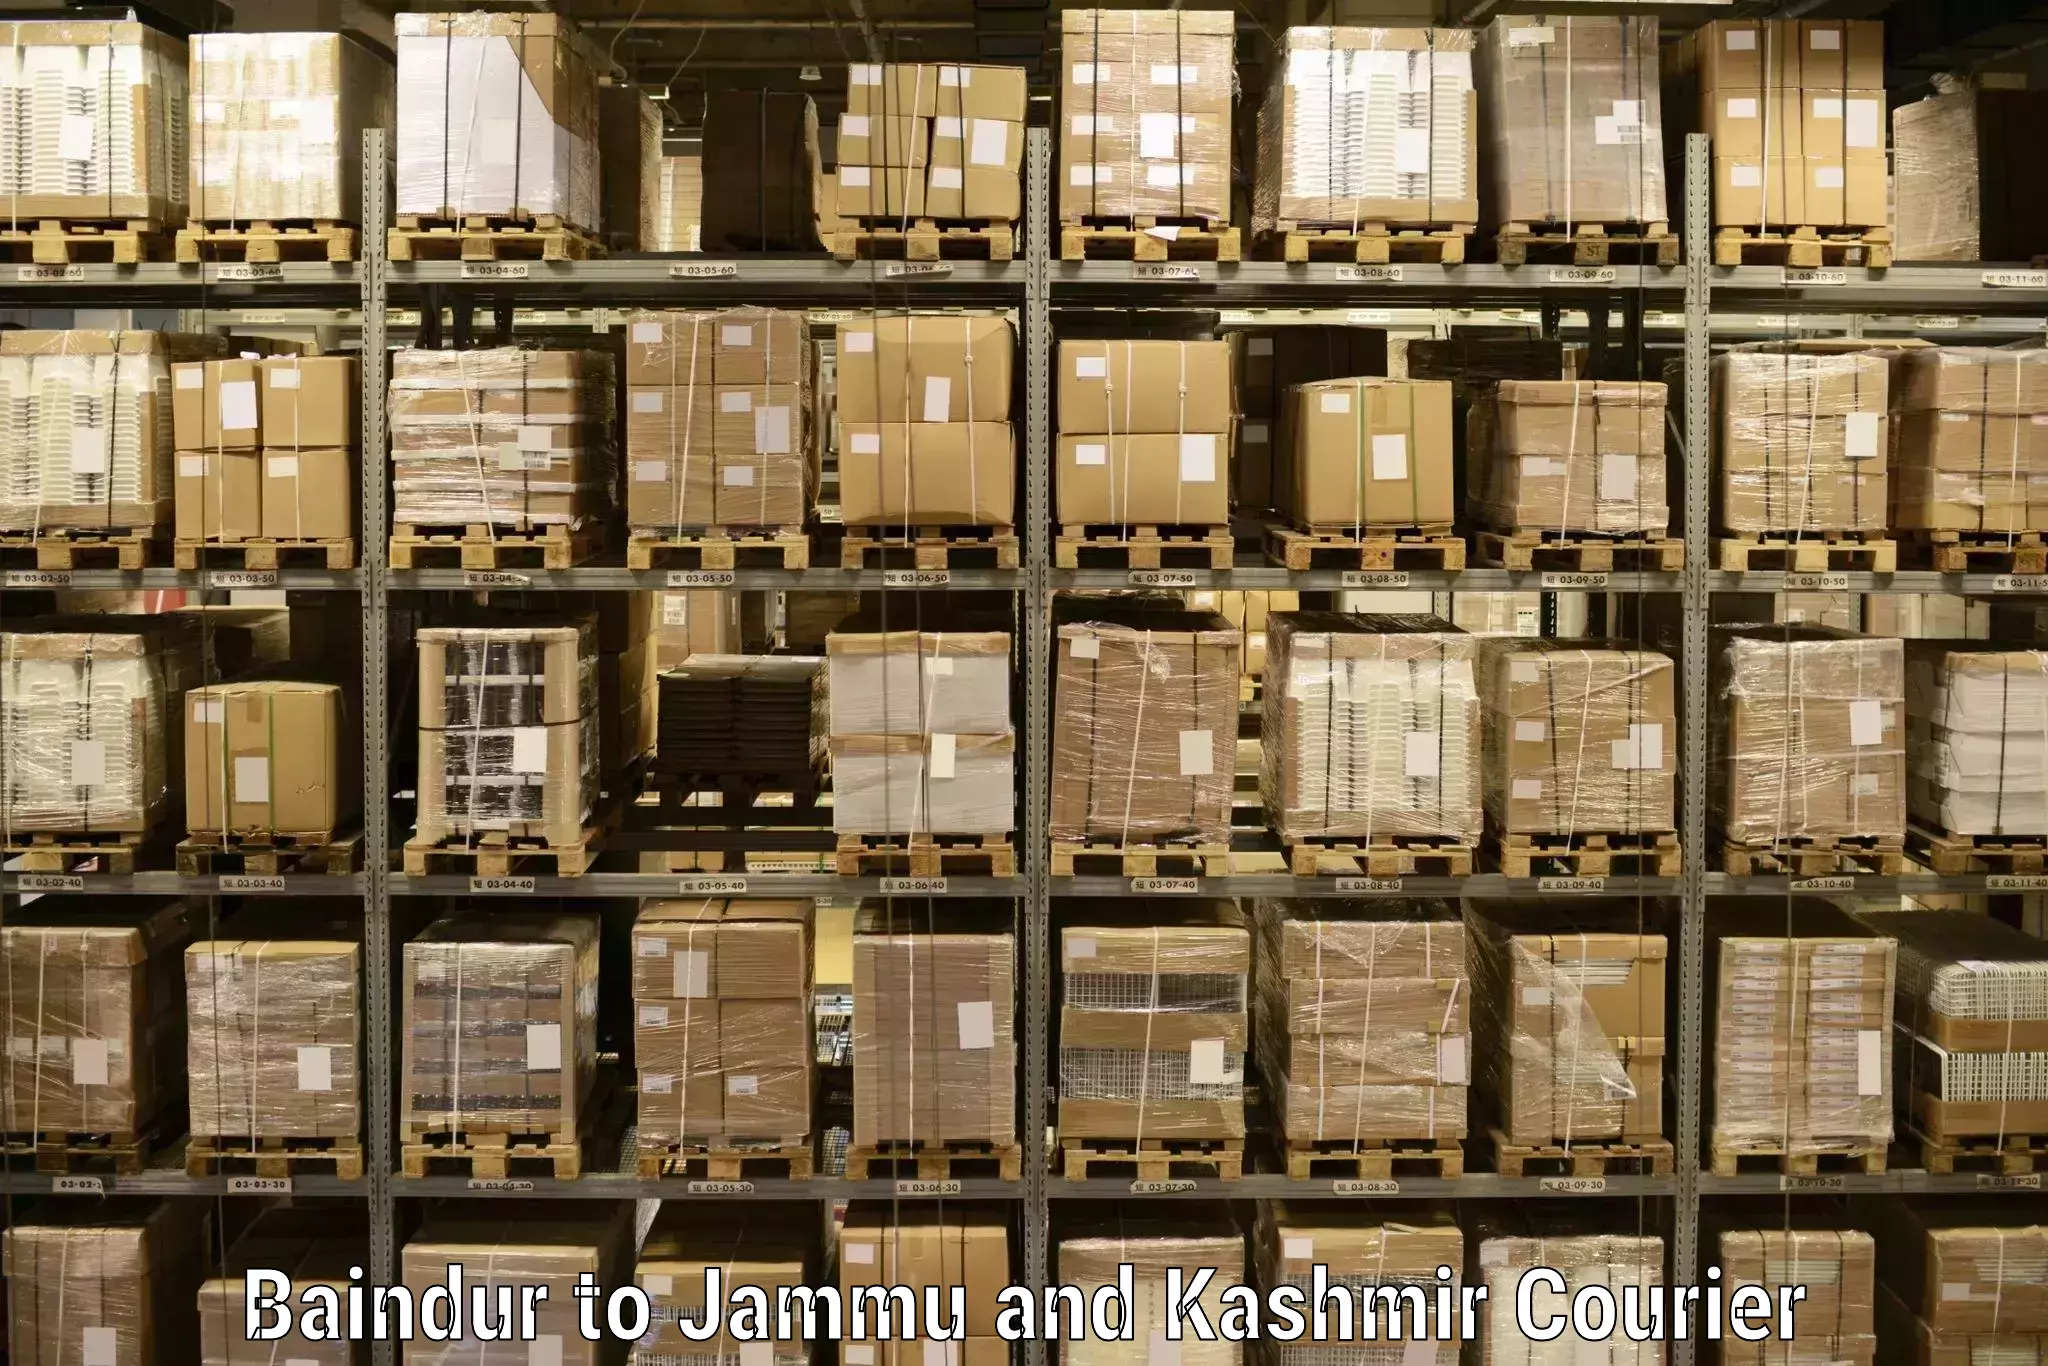 Package delivery network Baindur to Kargil